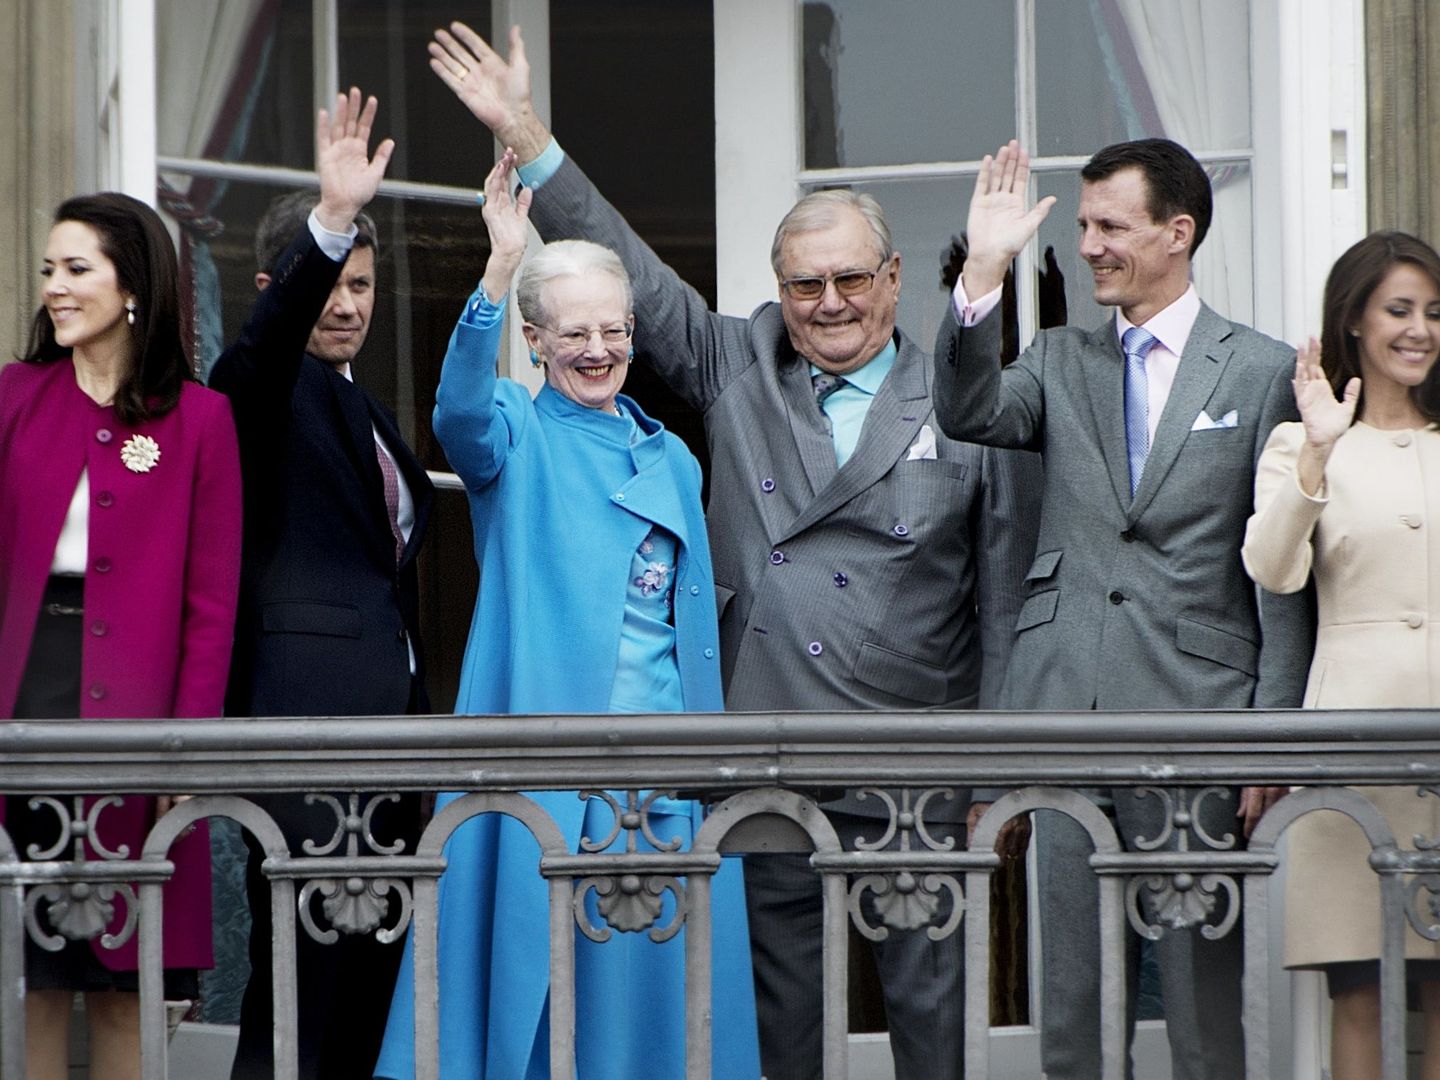 La familia real de Dinamarca en una imagen de 2016. (REUTERS)